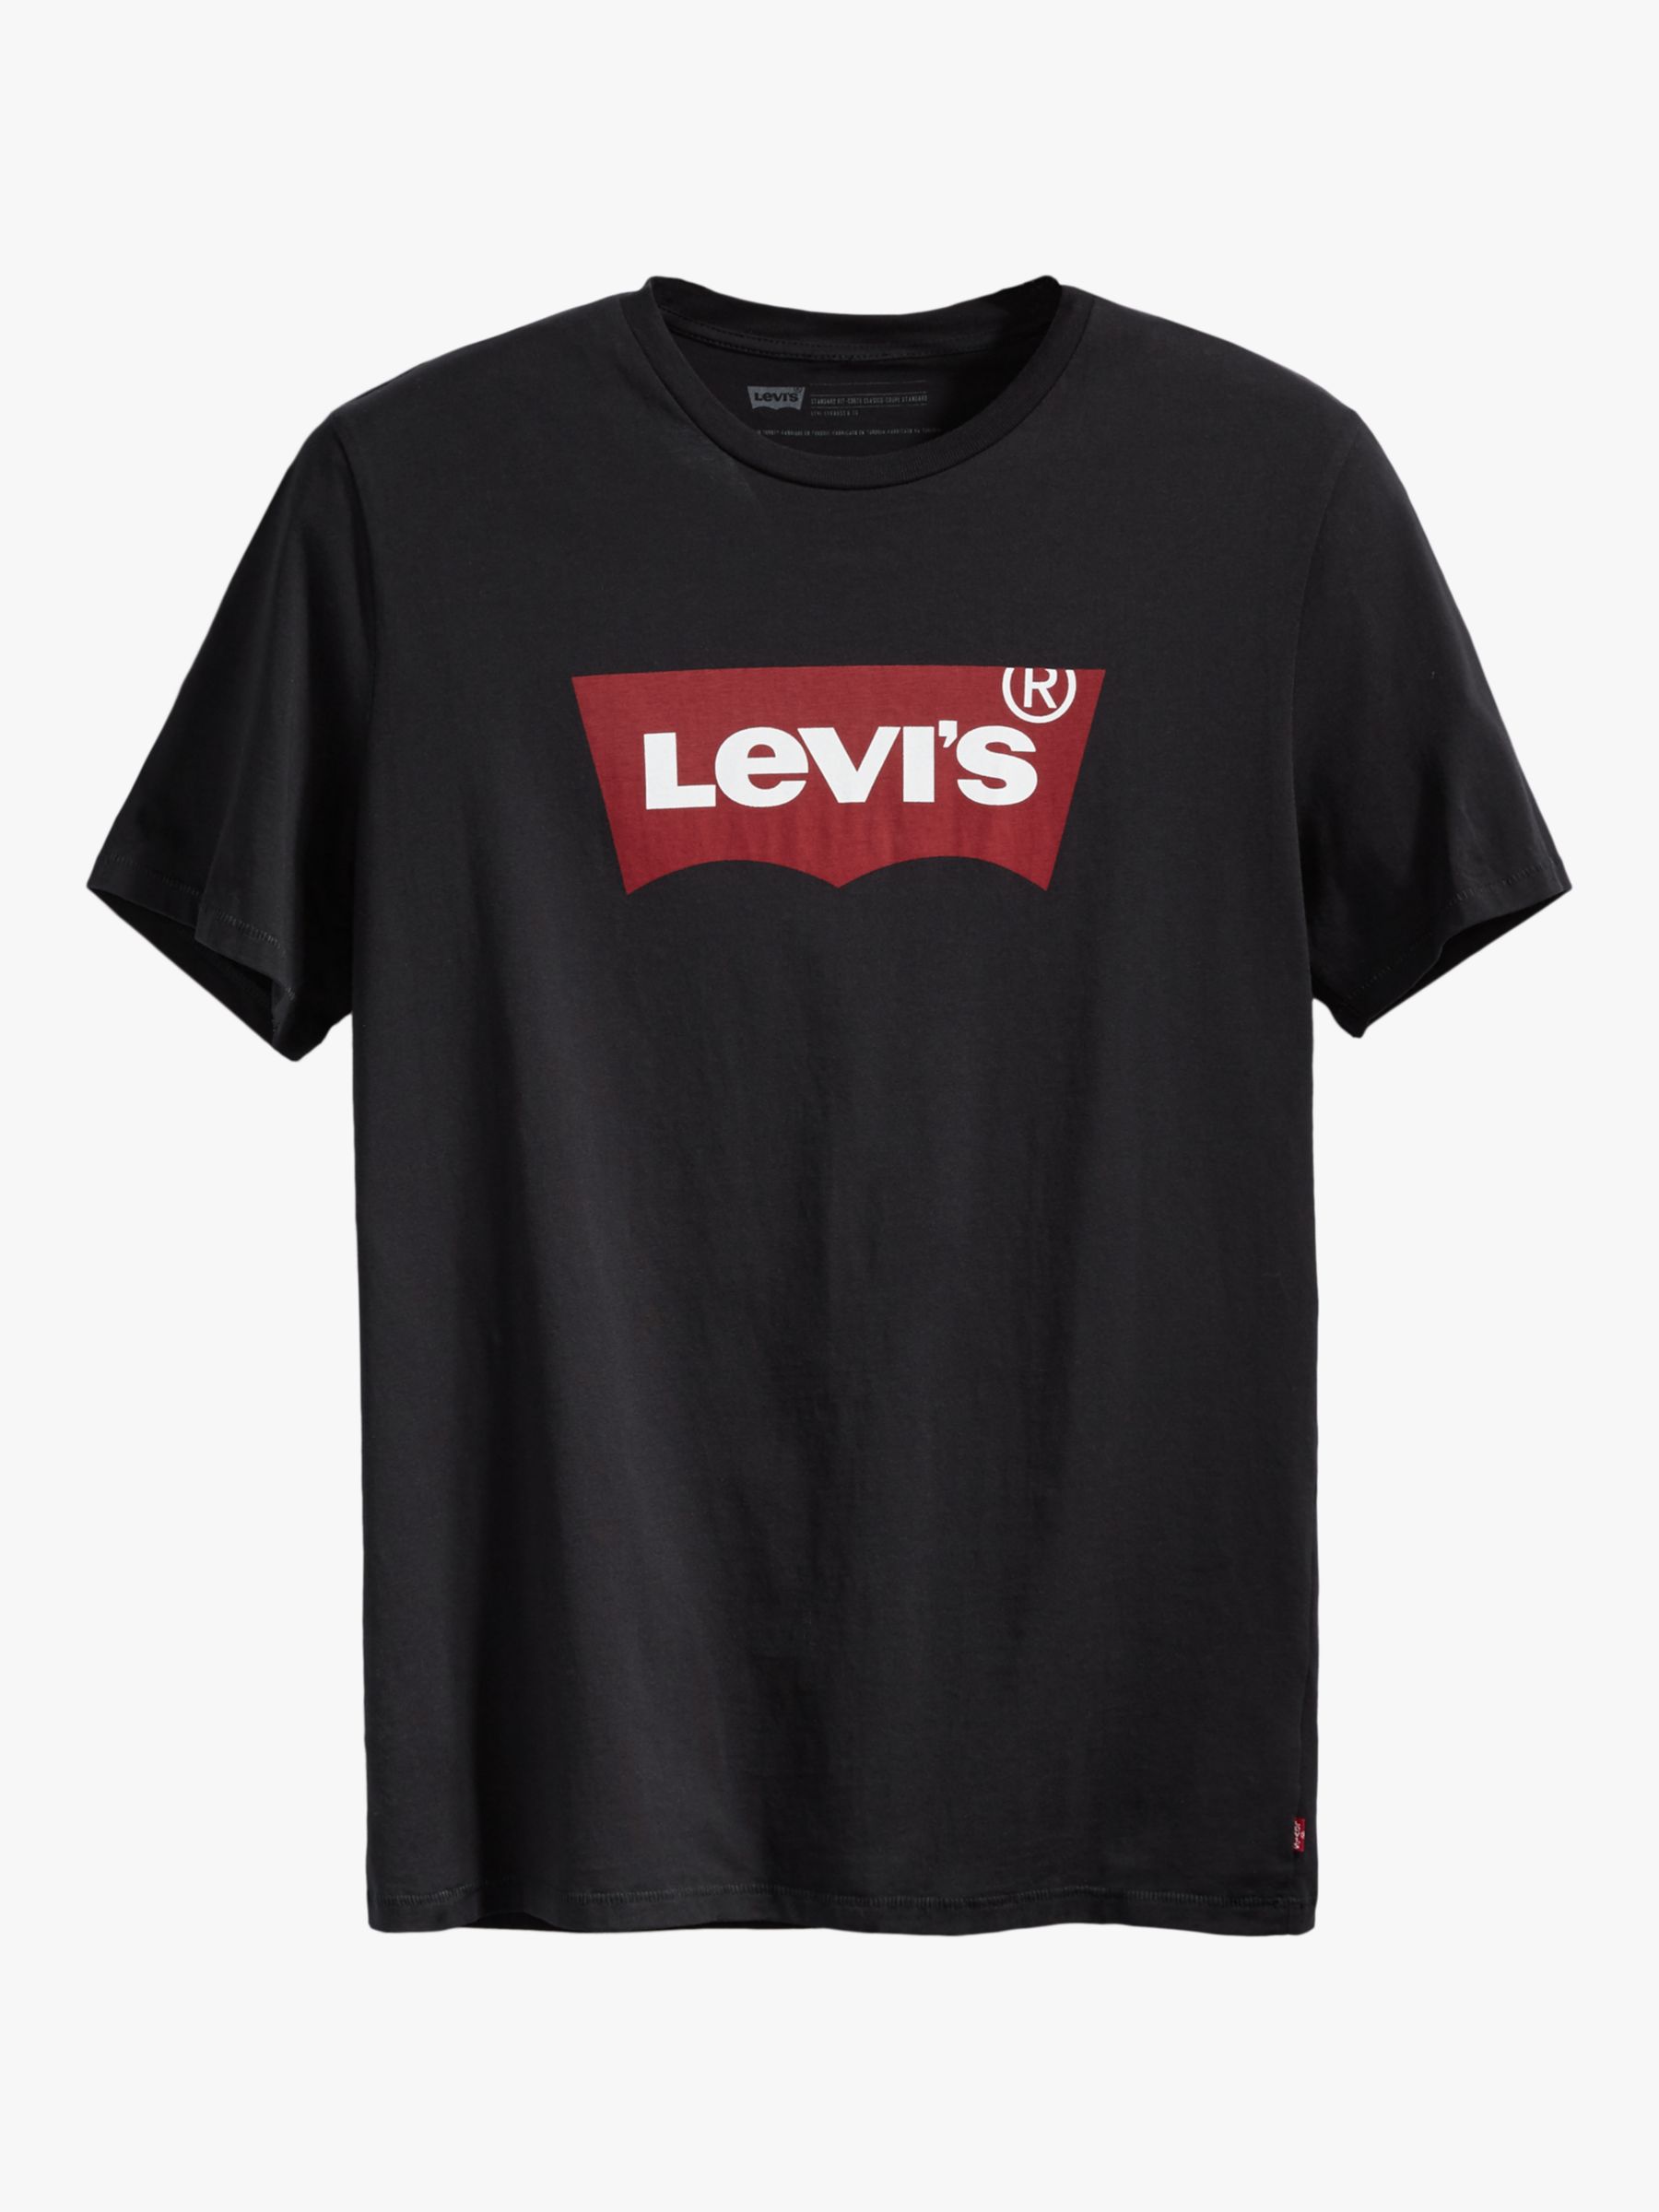 Levi's Batwing Graphic Logo T-Shirt, Black, S